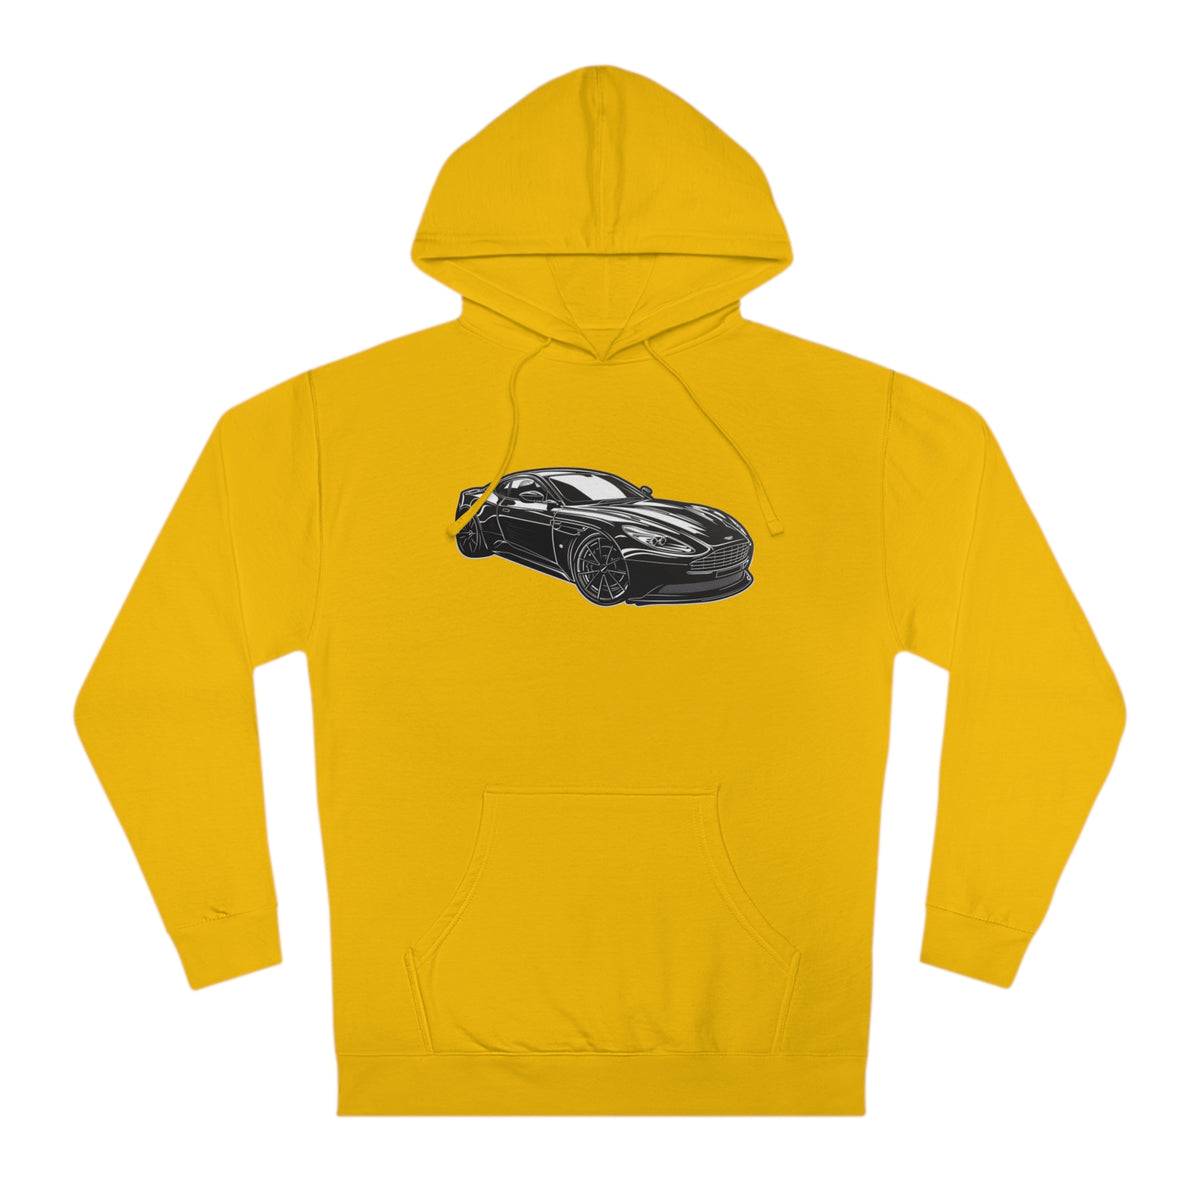 Sleek Silhouette Men's Hoodie with Aston Martin Graphic Hooded Sweatshirt